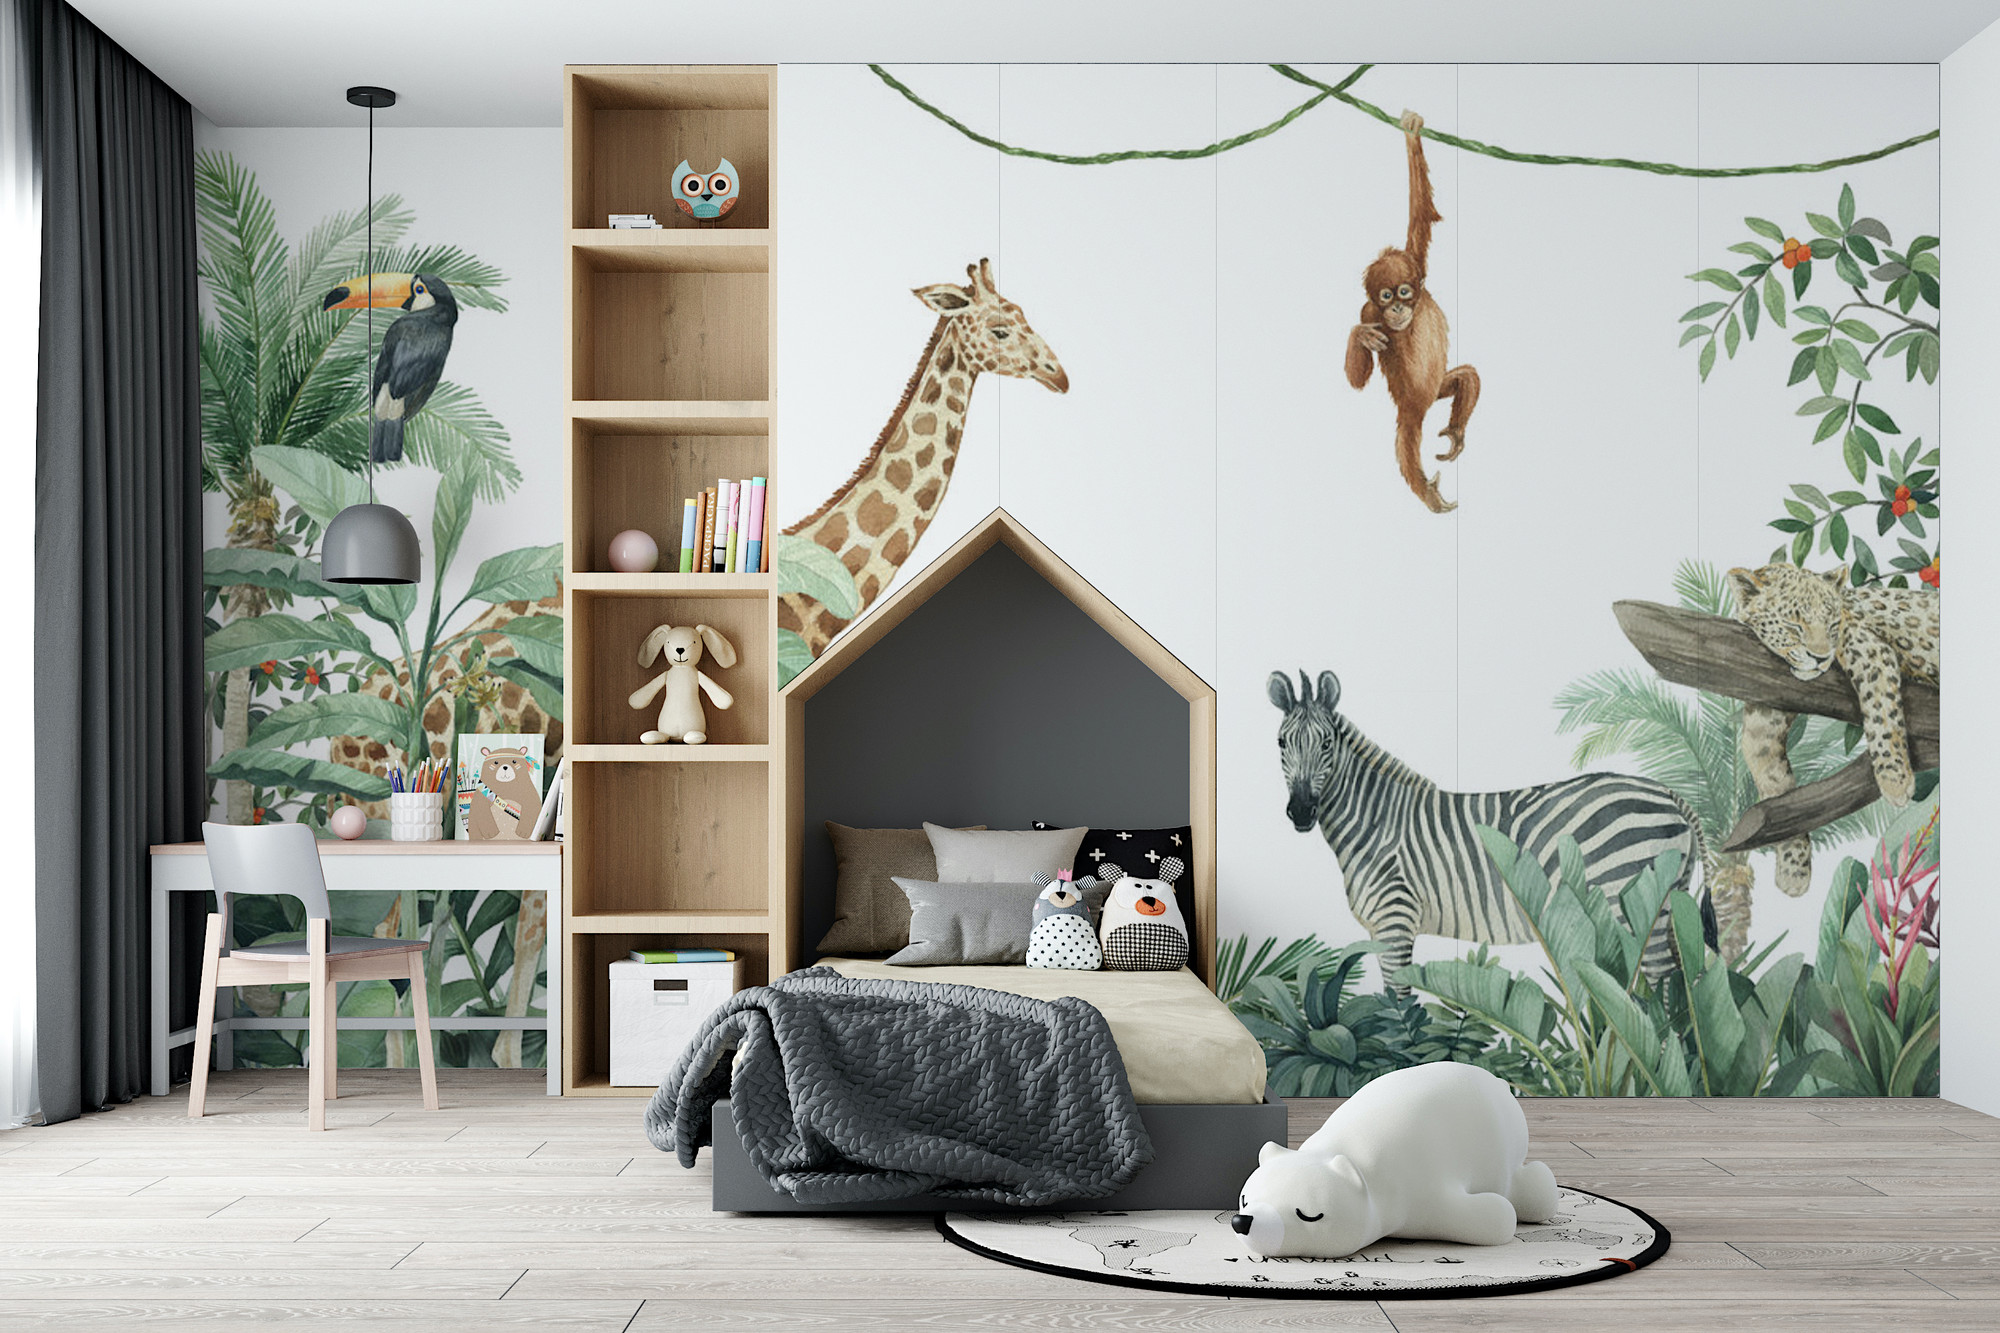 Jungle Friends Wallpaper Mural, Toucan, Giraffe, Monkey, Zebra, Leopard